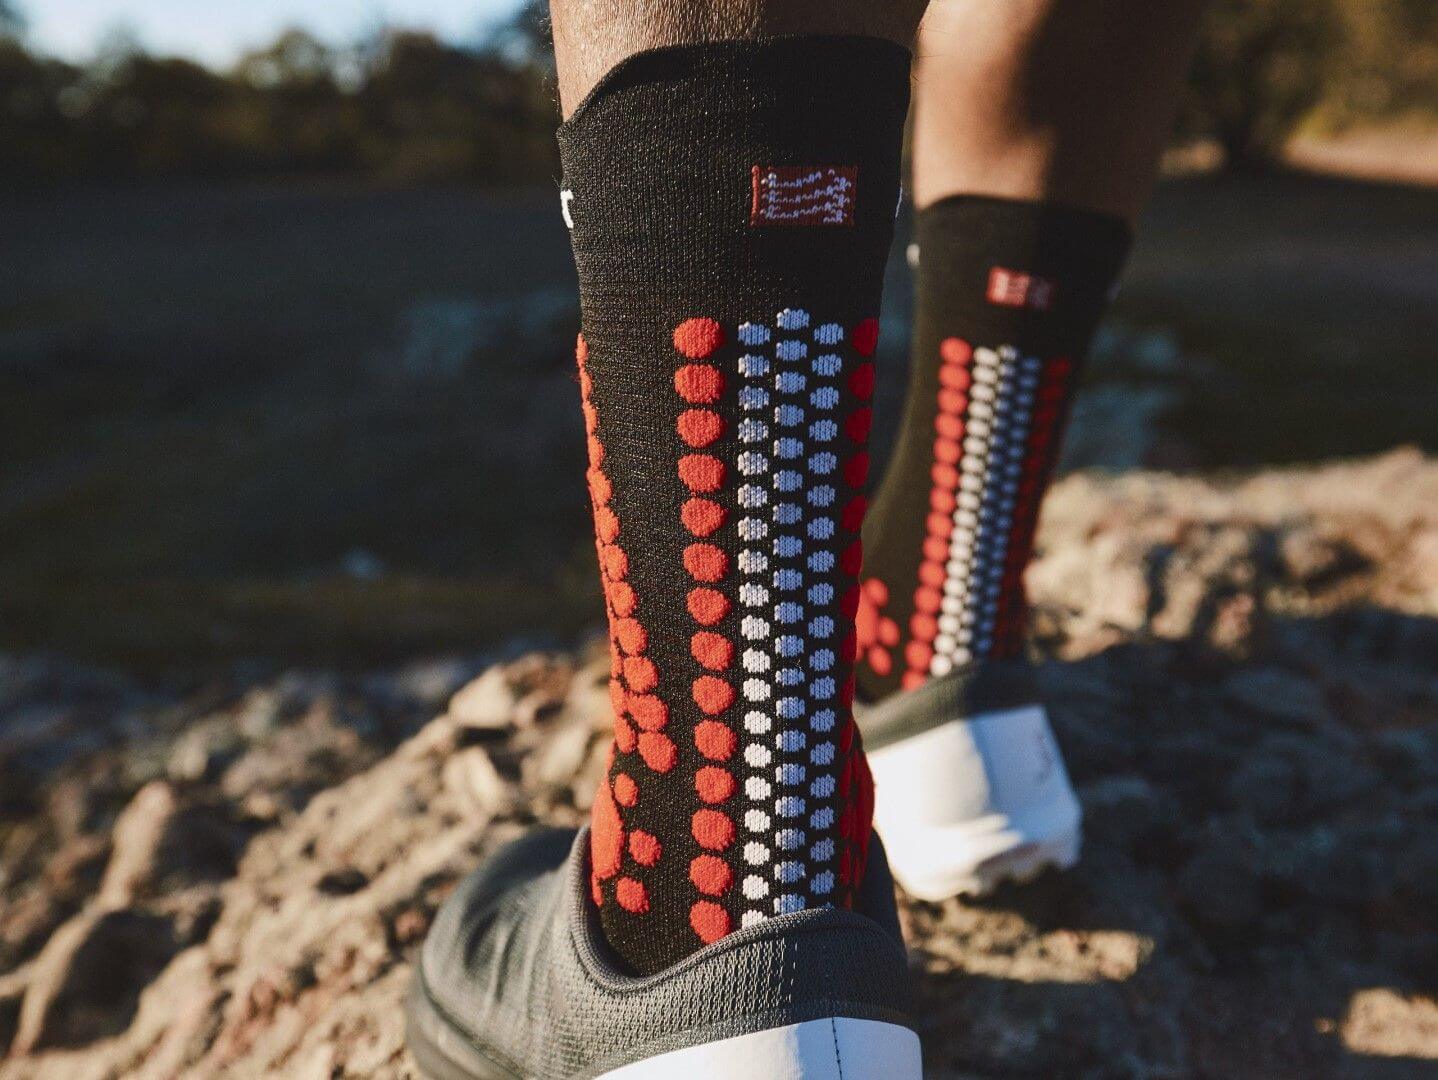 Calcetines de Trail Running Pro Racing Socks v4.0 Enamel/Paradise Gree